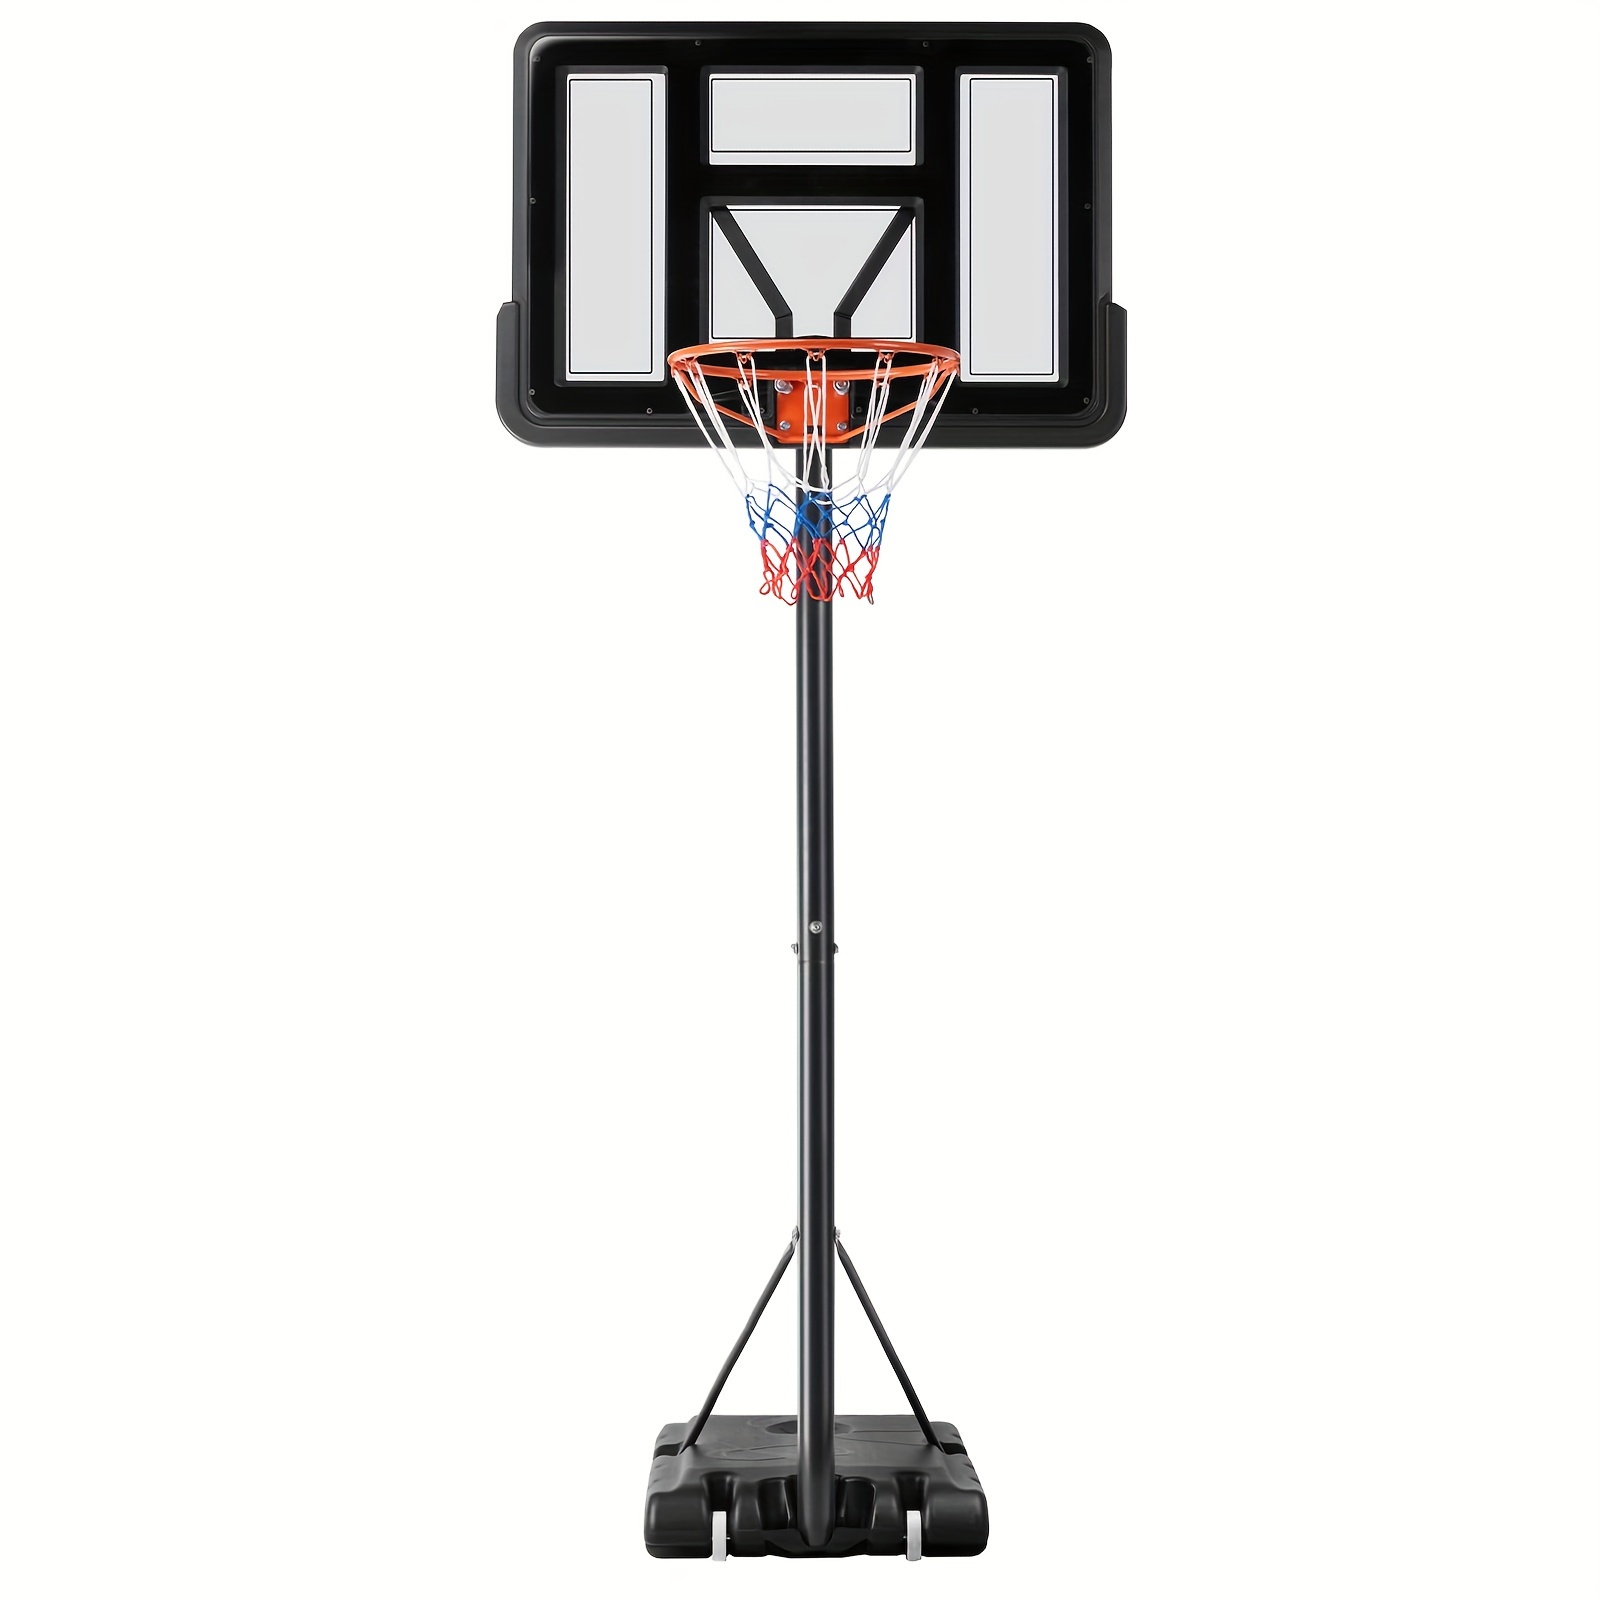 

Basketball Hoop Outdoor 4.2-10ft Adjustable Height, Portable Basketball Hoop Goal Court System For Kids/adults, 44 Inch Shatterproof Backboard, Shock Absorbent Rim, Fillable Base 2 Wheels